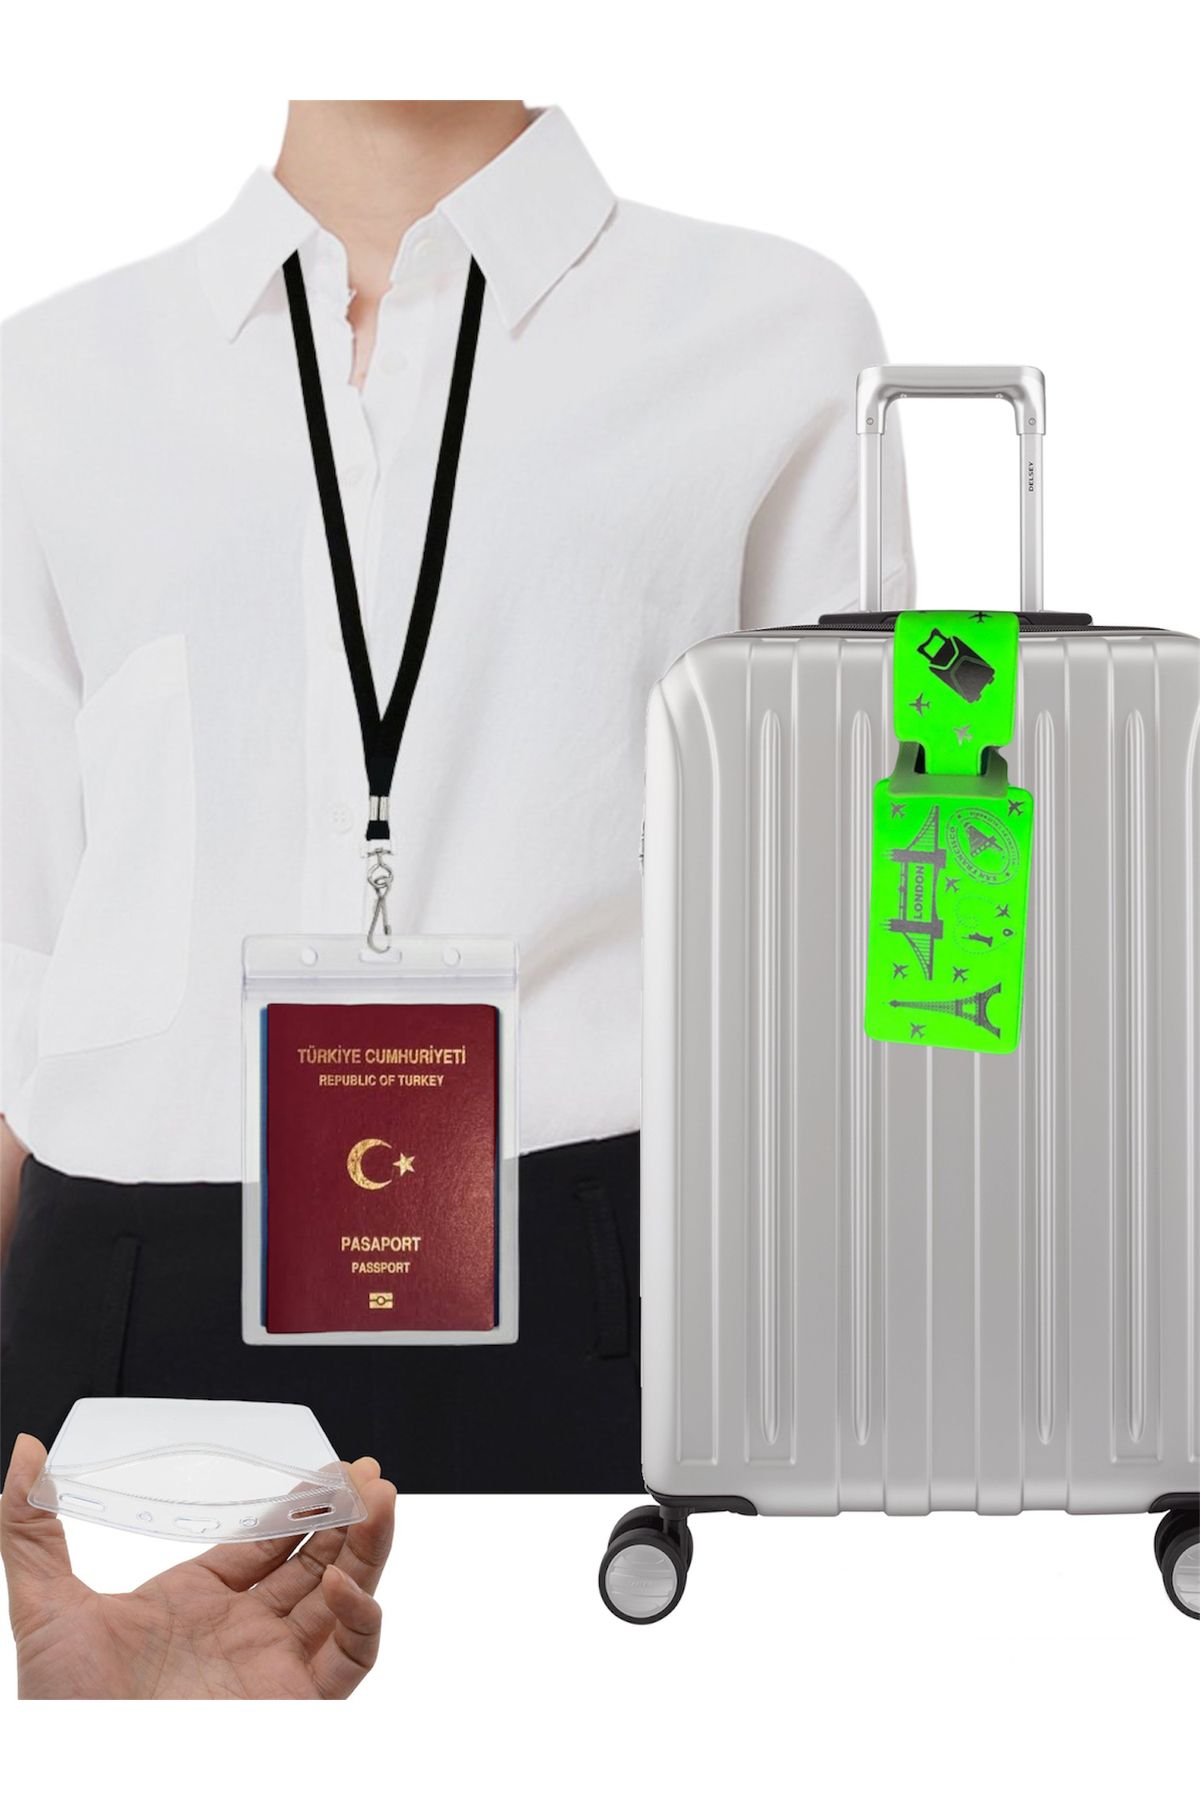 Gempo 4 Parça Seyahat Anti Kayıp Set 1 Ad Kilitli Askılı Pasaport Kılıfı Ve 3 Ad Neon Valiz Bagaj Etiketi